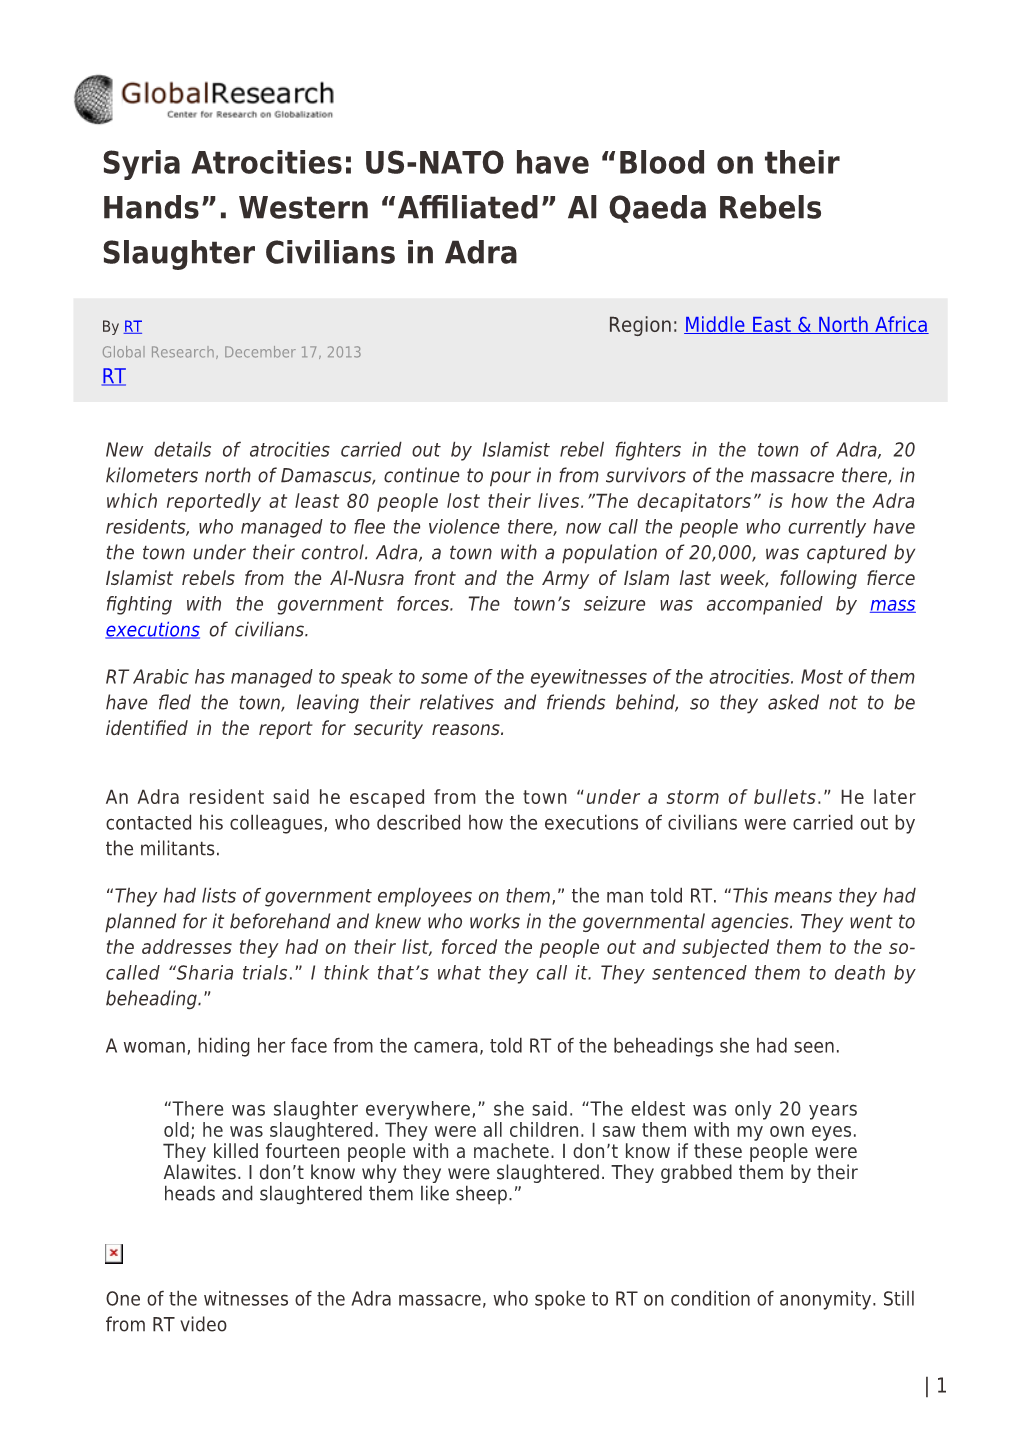 Al Qaeda Rebels Slaughter Civilians in Adra